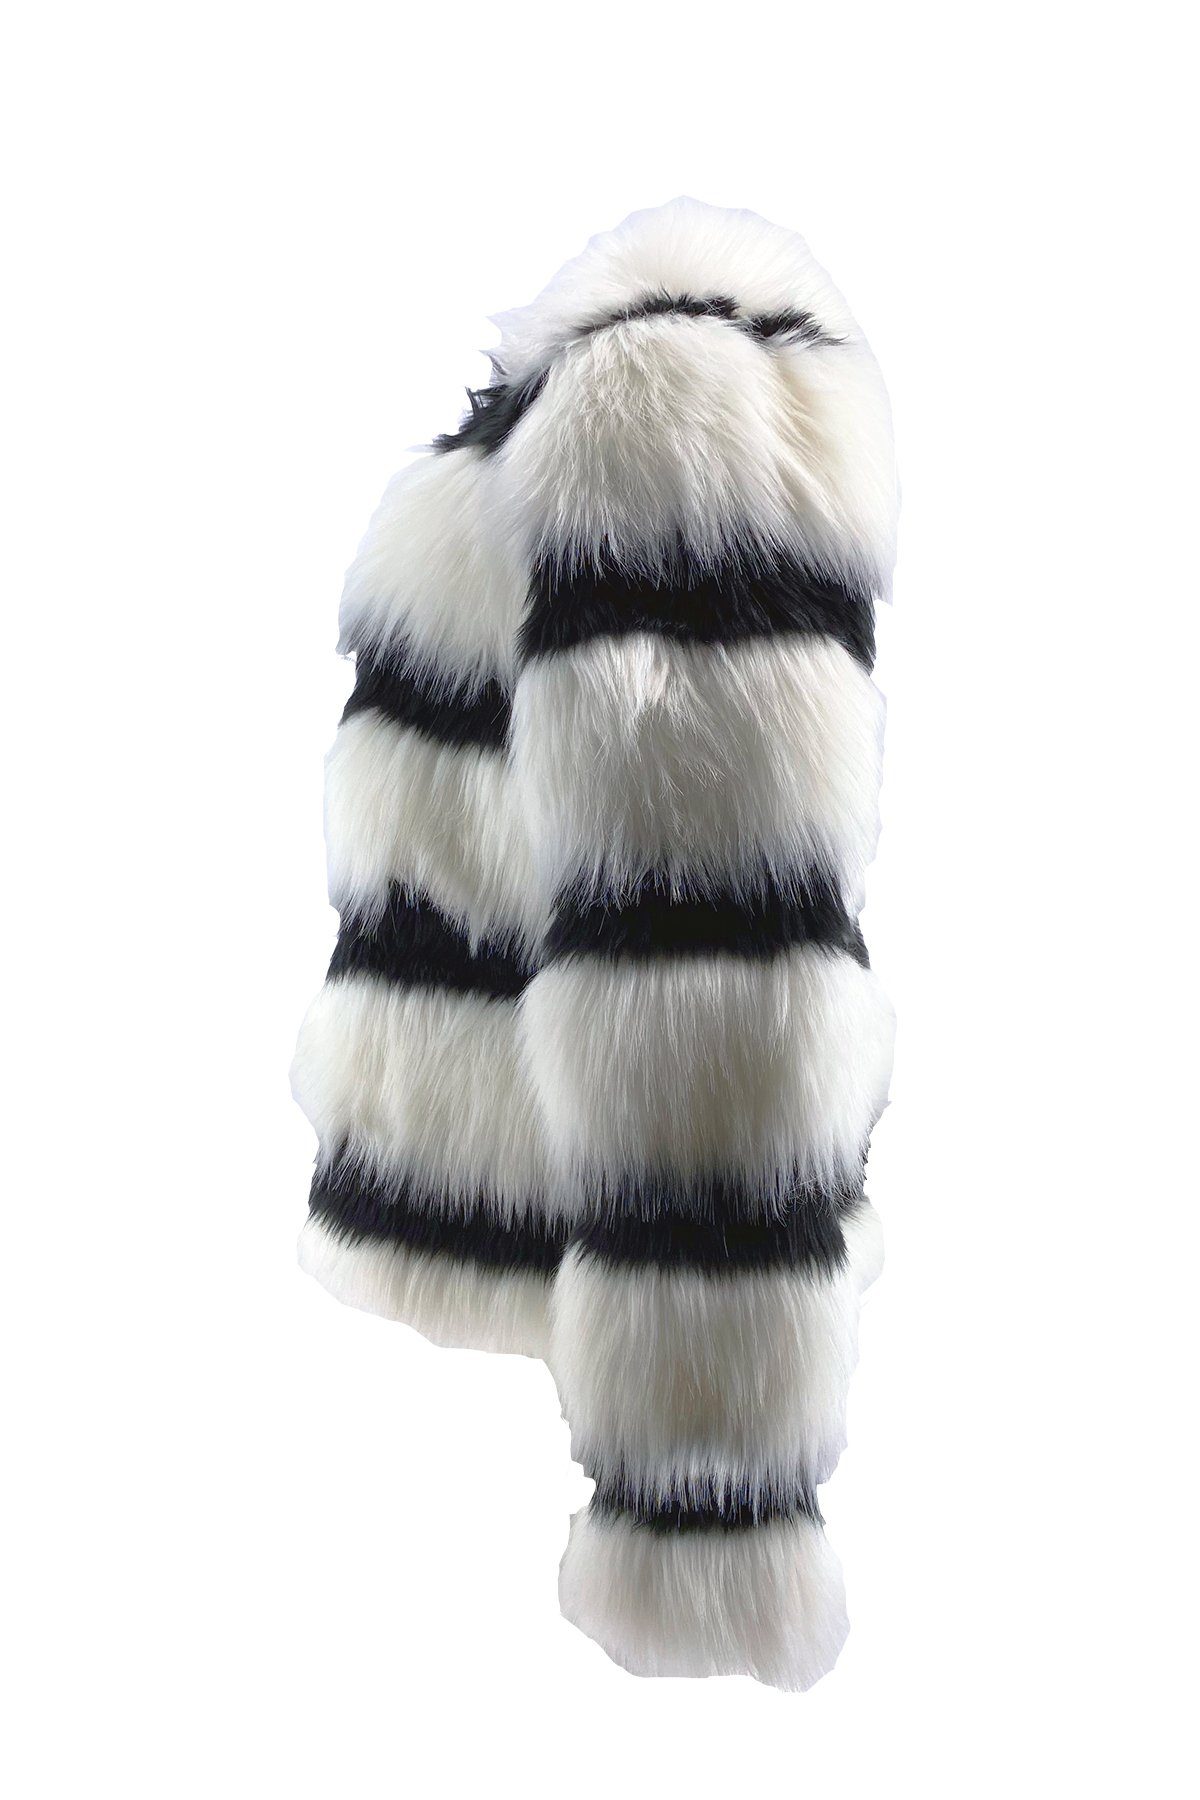 Antonio Cavosi Fellimitatjacke Mehrfarbige Jacke mit Web-Pelz Reißverschluss weiß-schwarz kuschelige